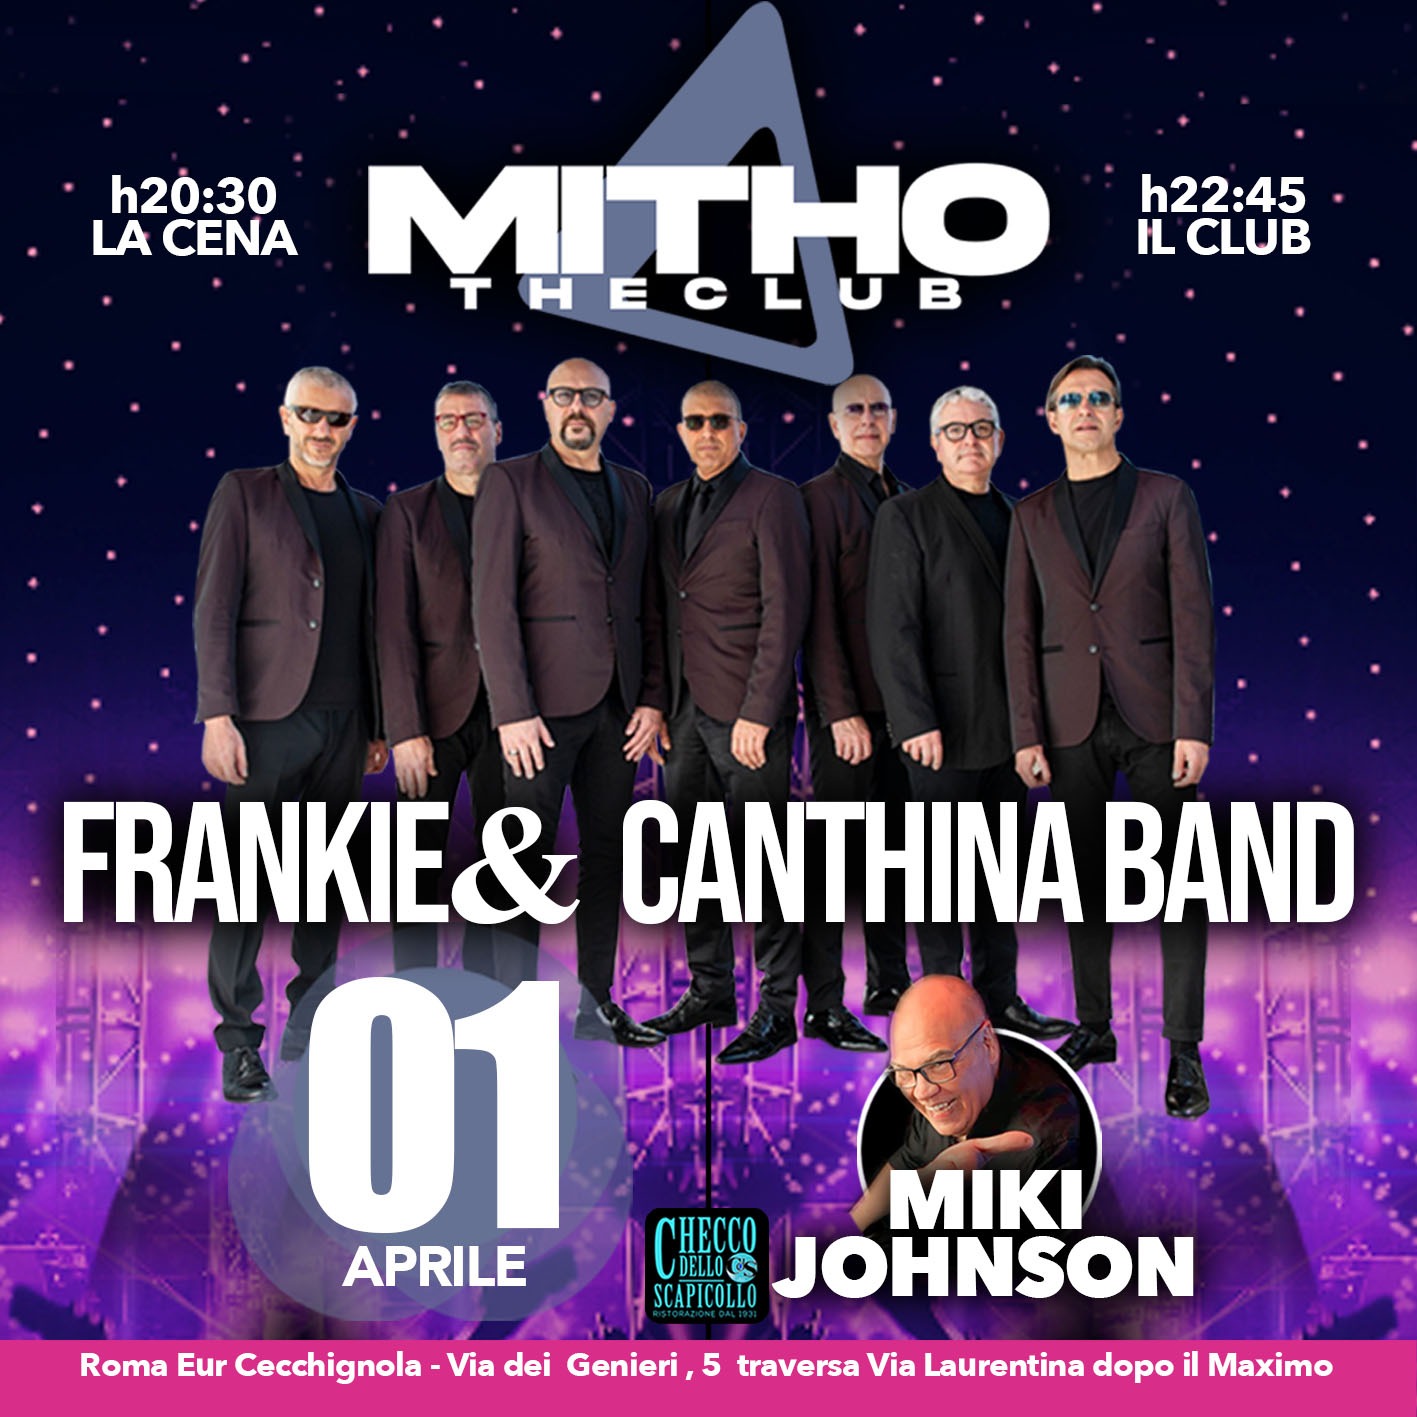 Frankie e Cantina Band Mitho sabato 1 aprile 2023 + Djset!